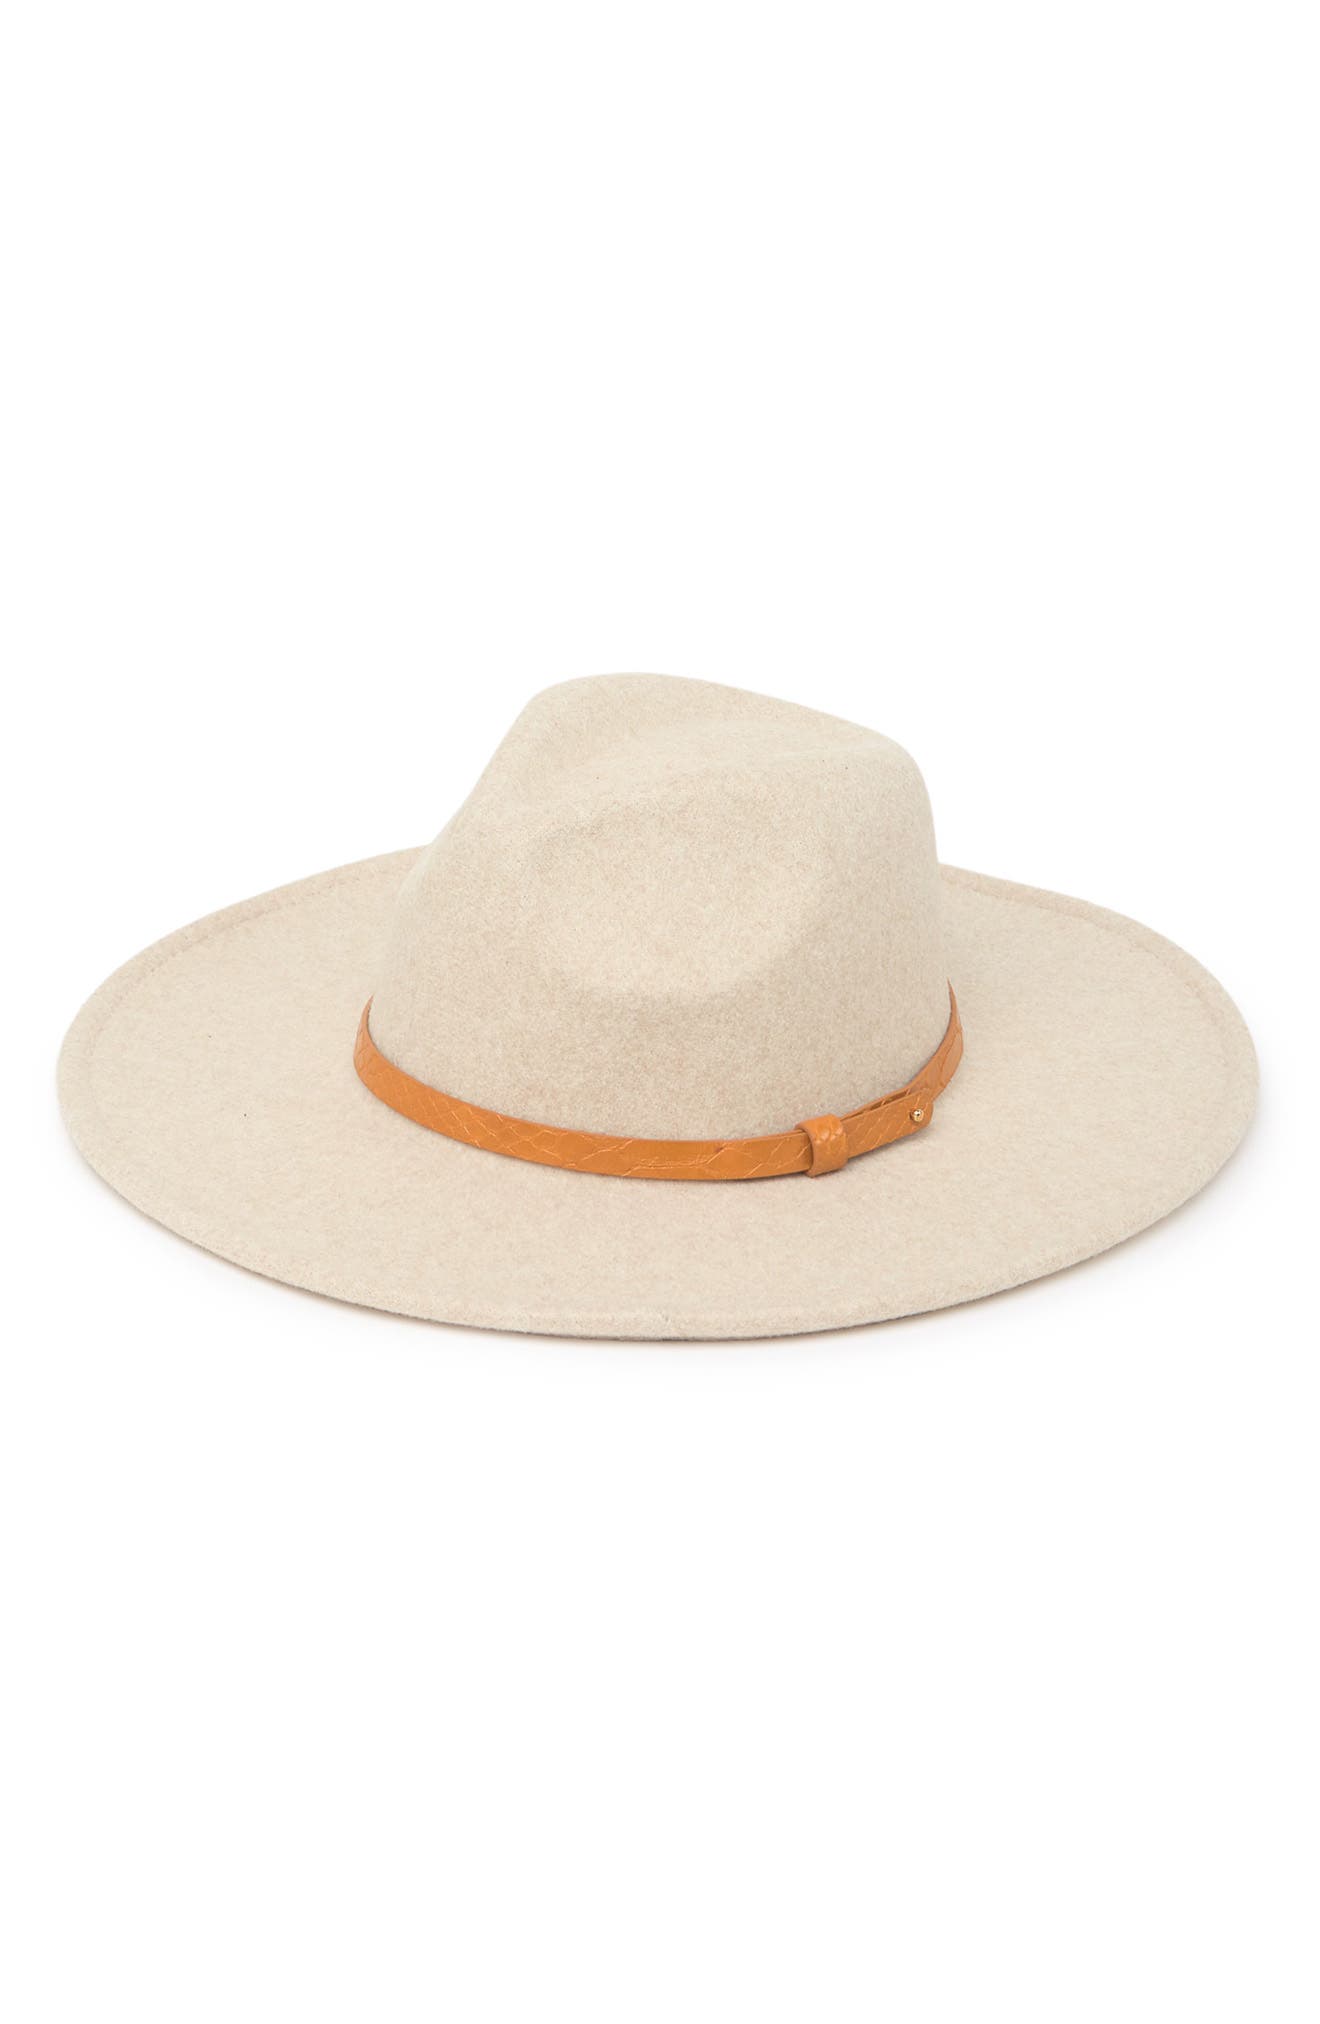 Marcus Adler Tau Vegan Leather Band Wool Blend Panama Hat In Taupe